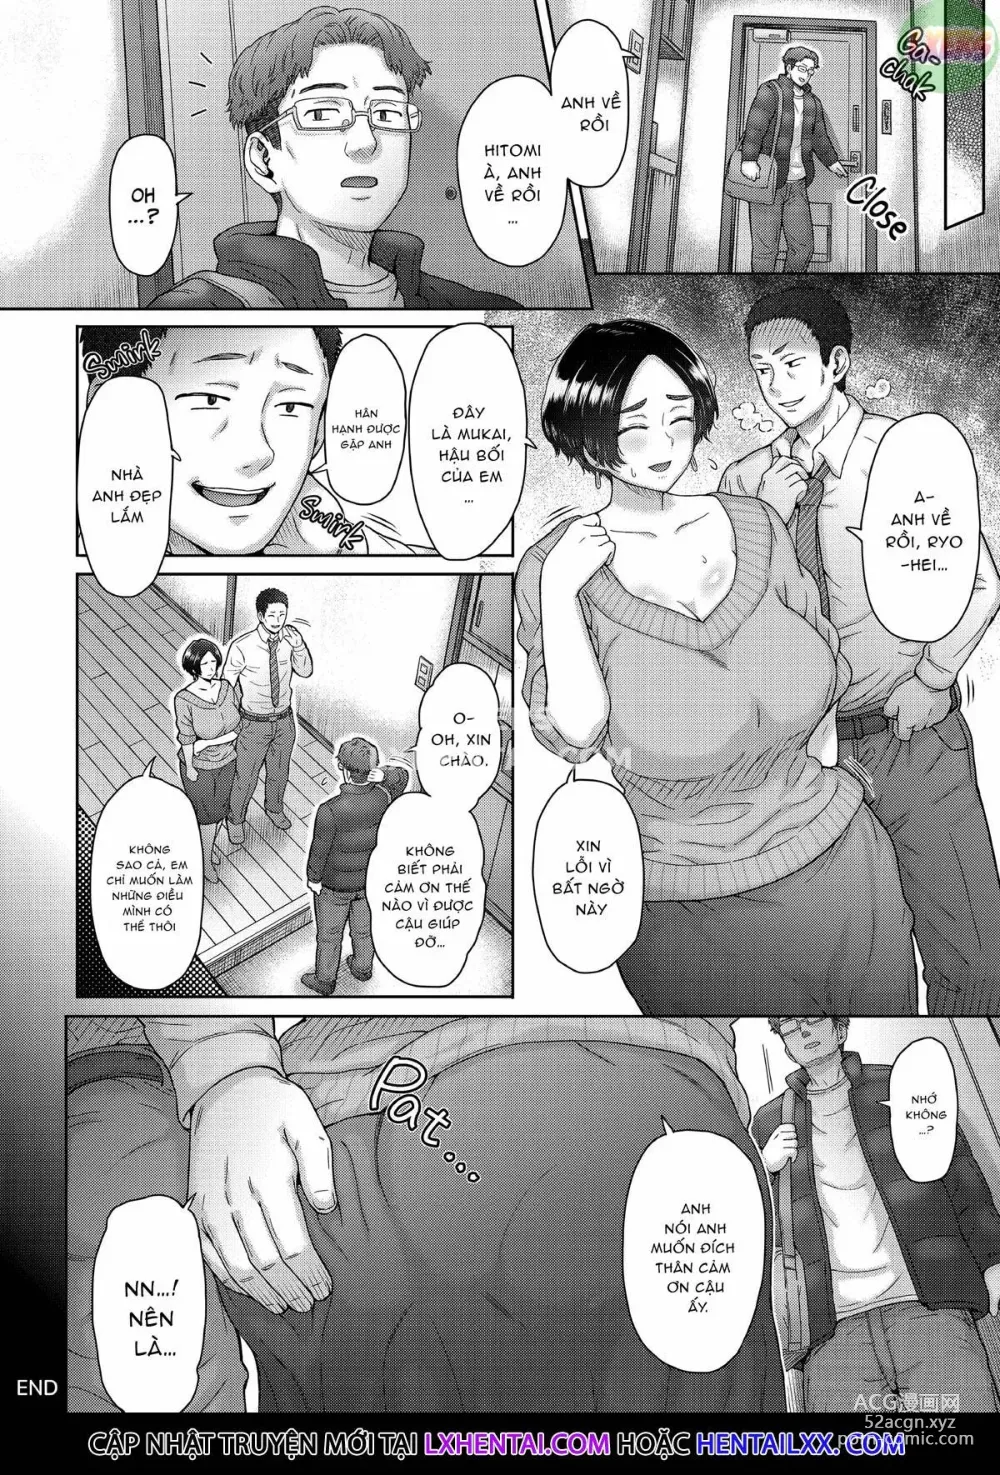 Page 31 of doujinshi Anegohada Hitozuma Hitomi (uncensored)